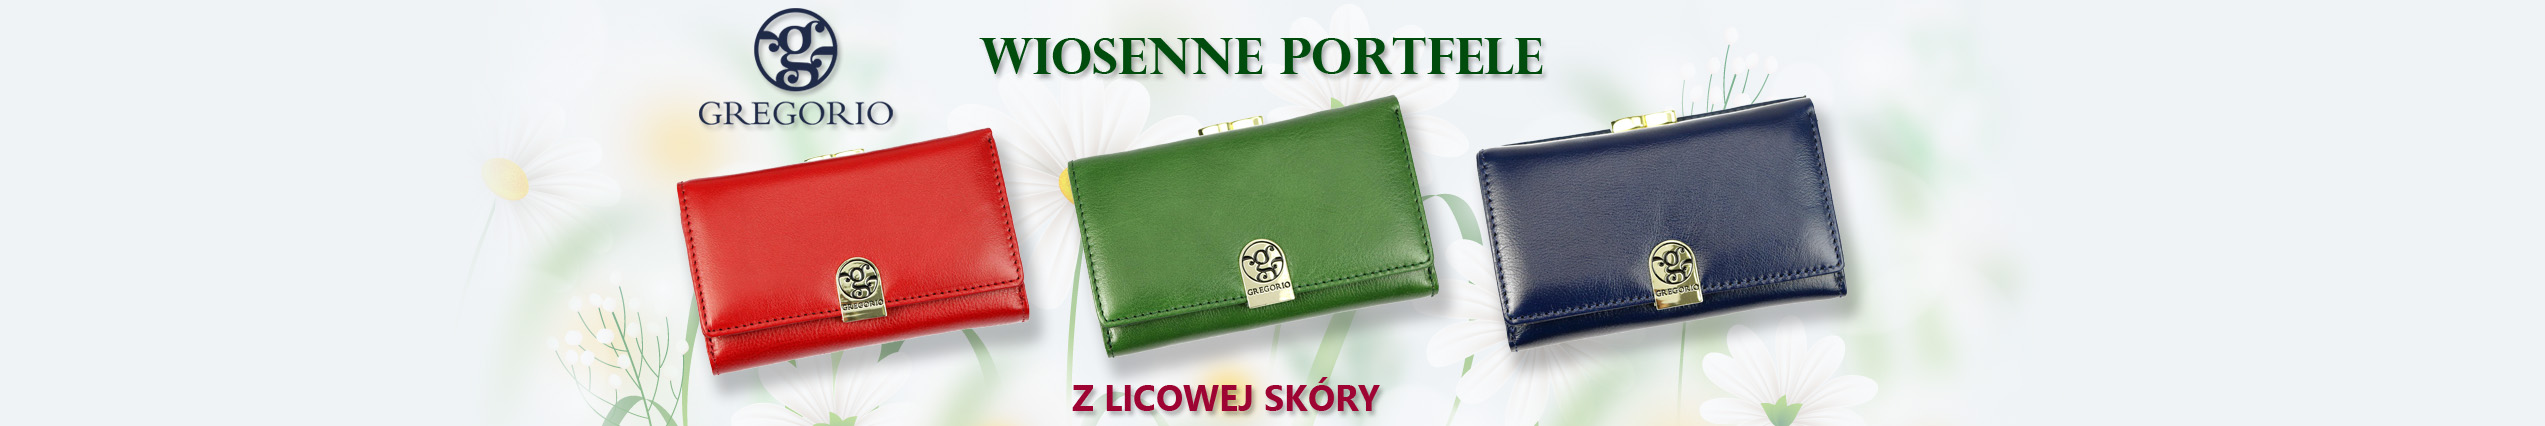 Wiosenne portfele - skórzane portfele - GREGORIO.com.pl